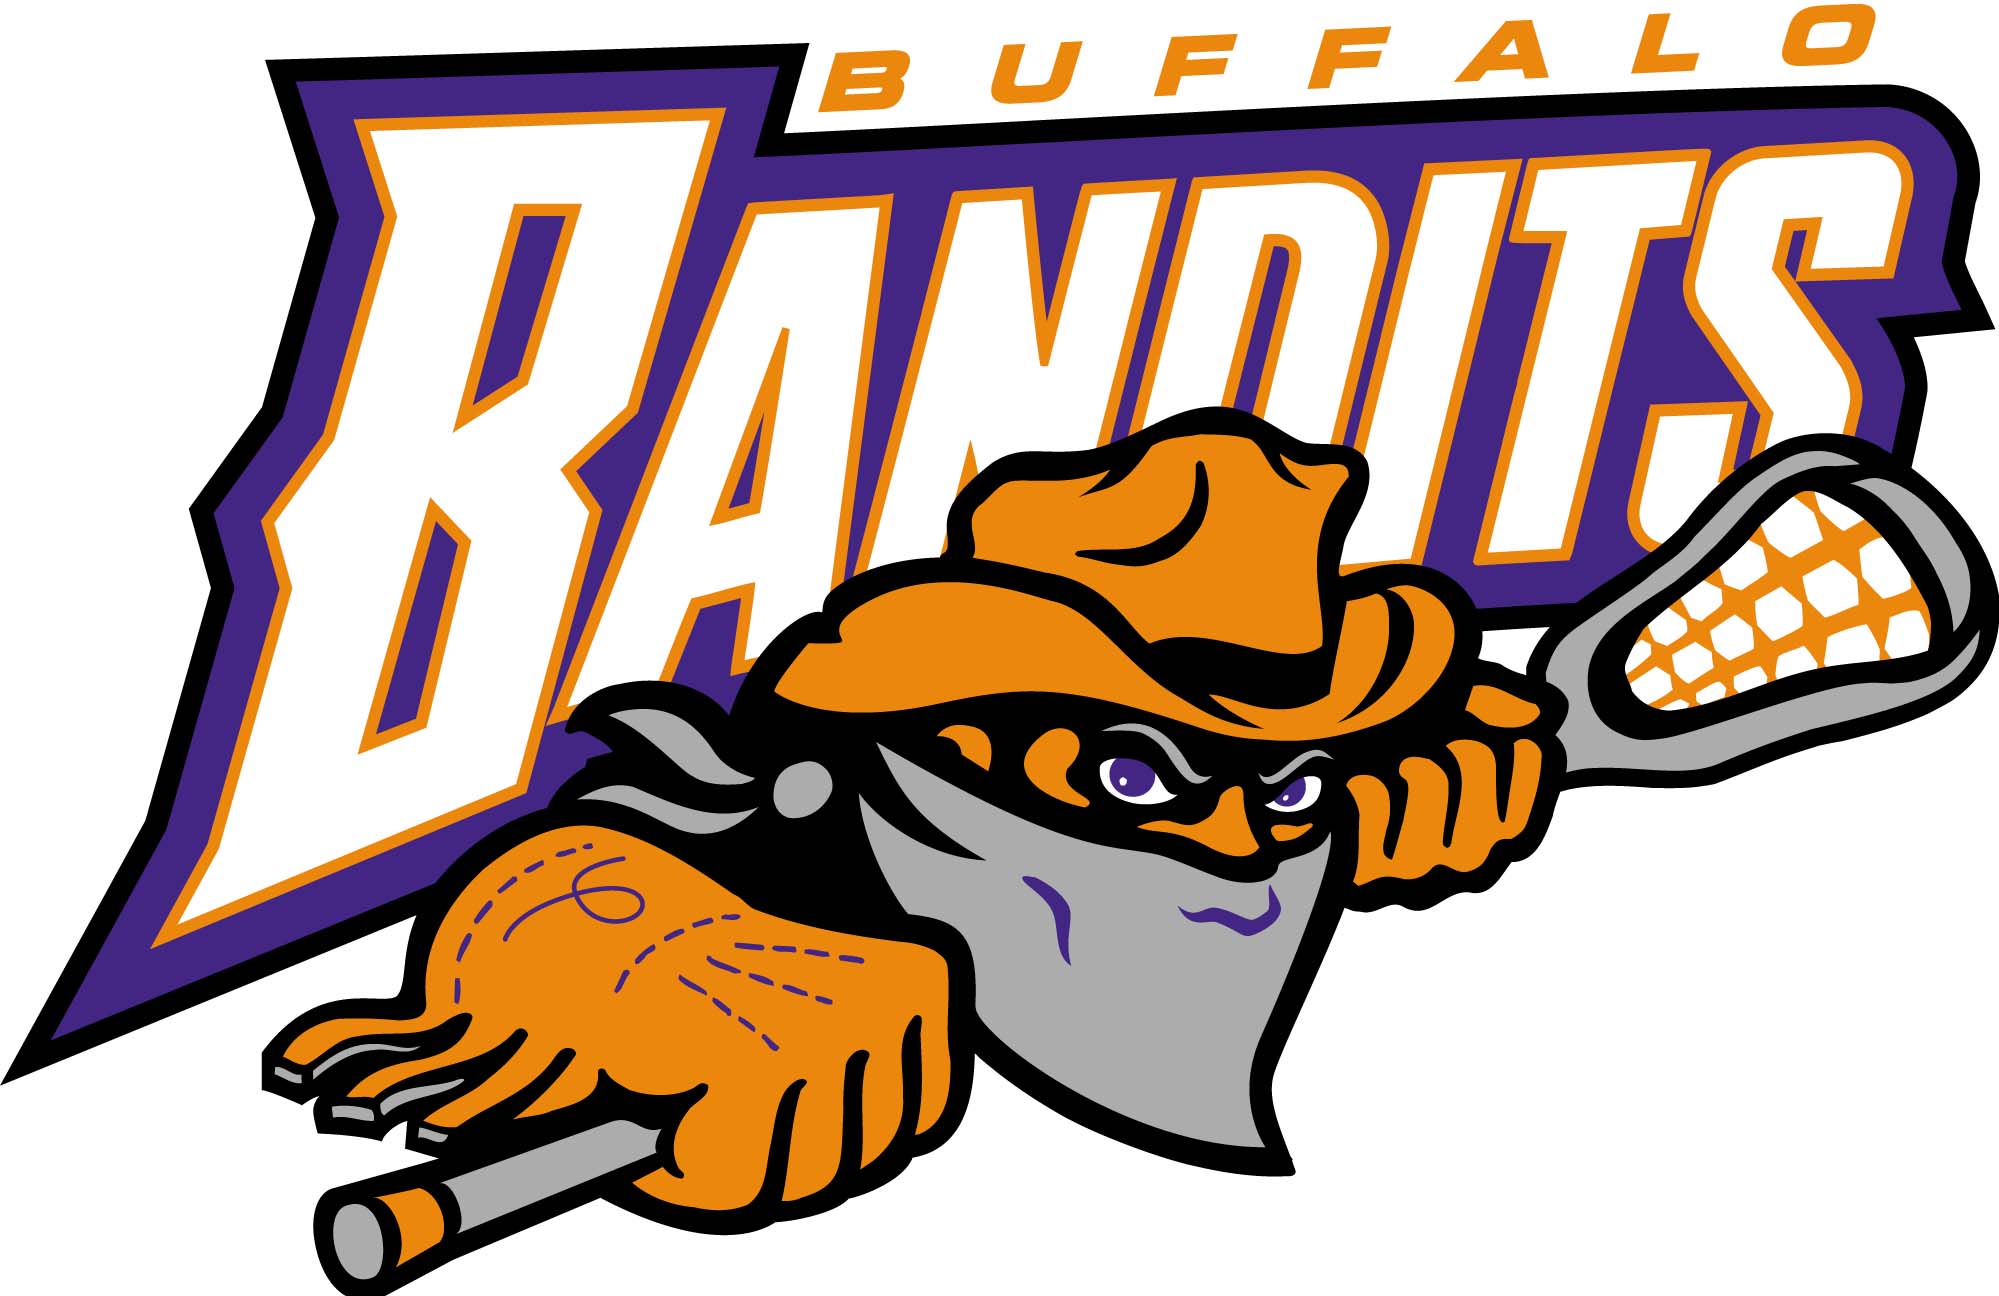 Buffalo Bandits to sponsor Wheelchair Lacrosse Tournament